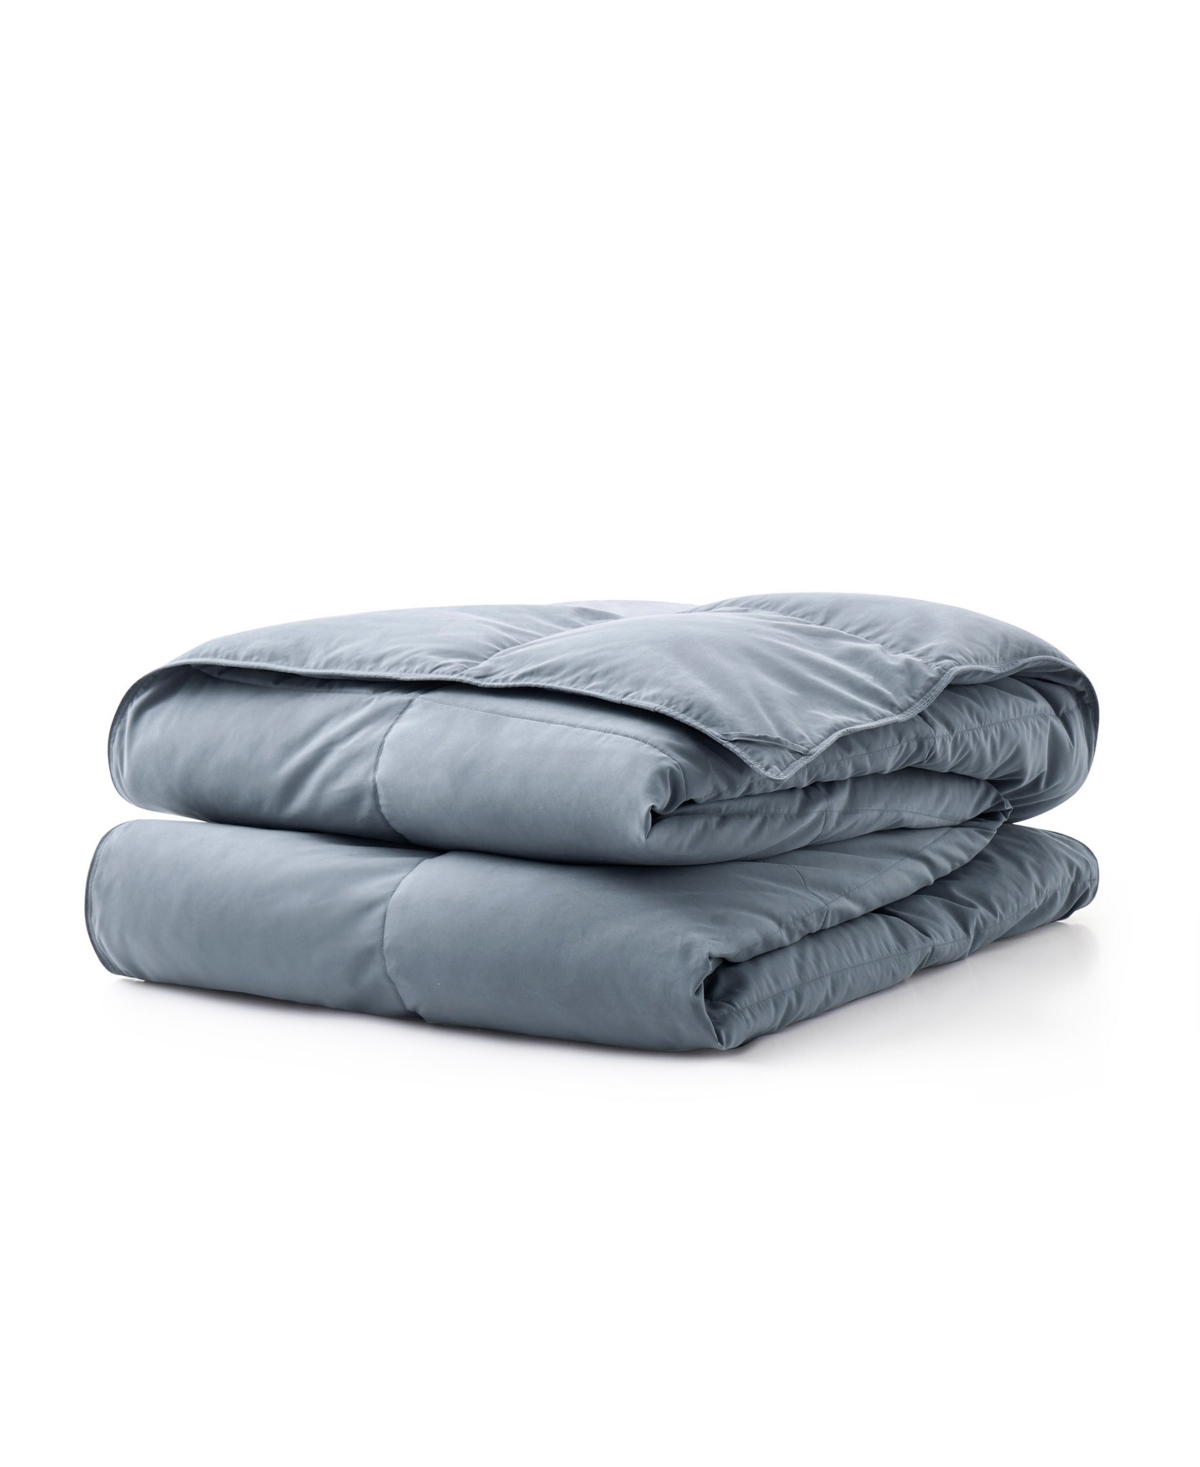 Unikome All Season 300 Thread Count Cotton Goose Down Fiber Comforter, King In Gray